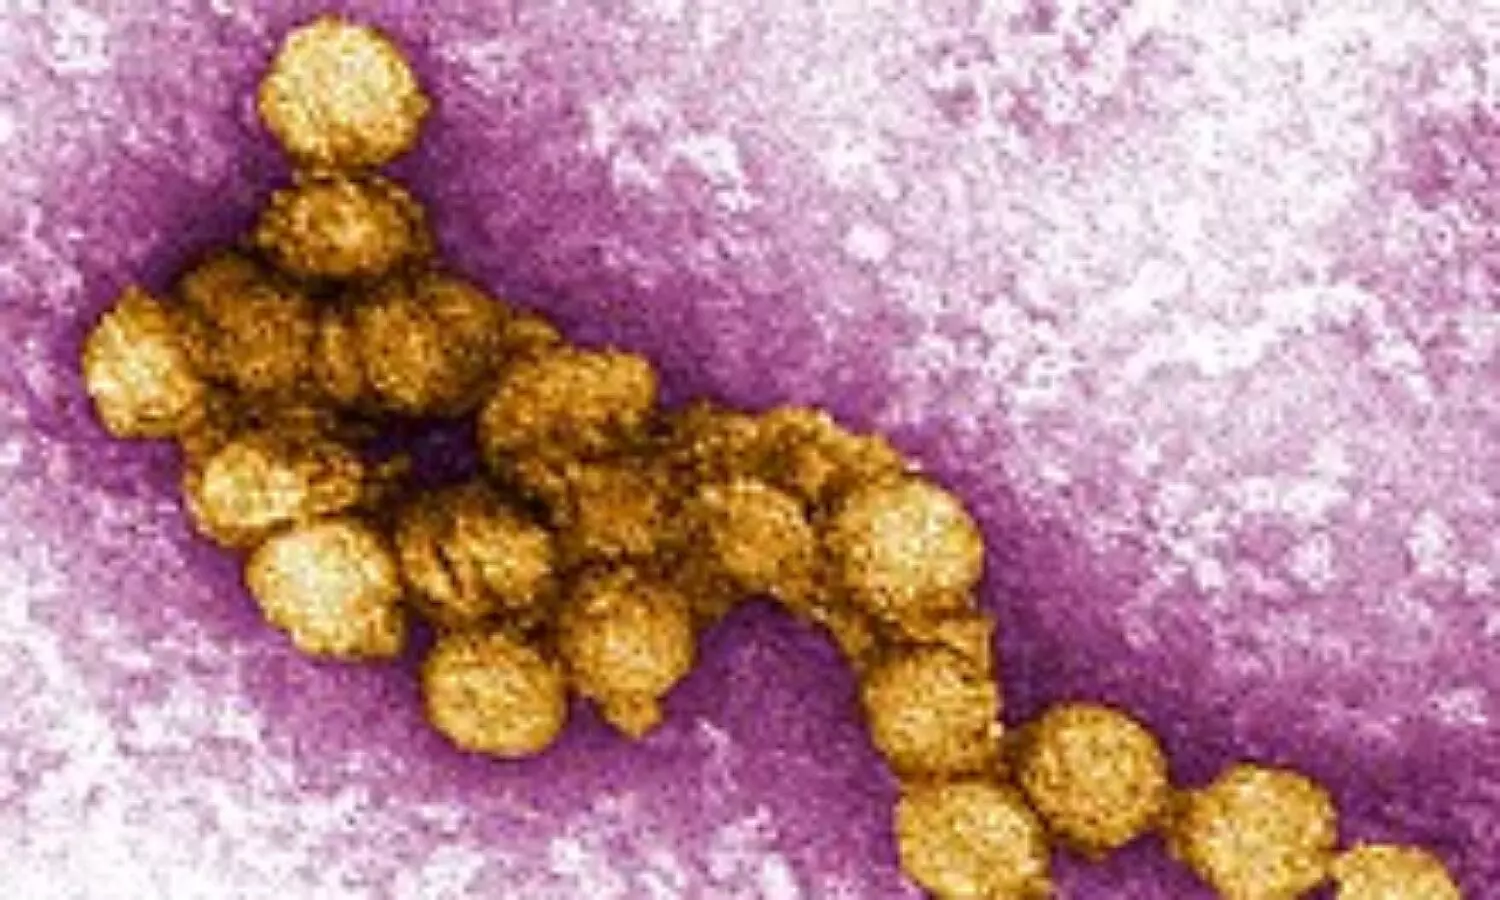 West Nile virus in California news